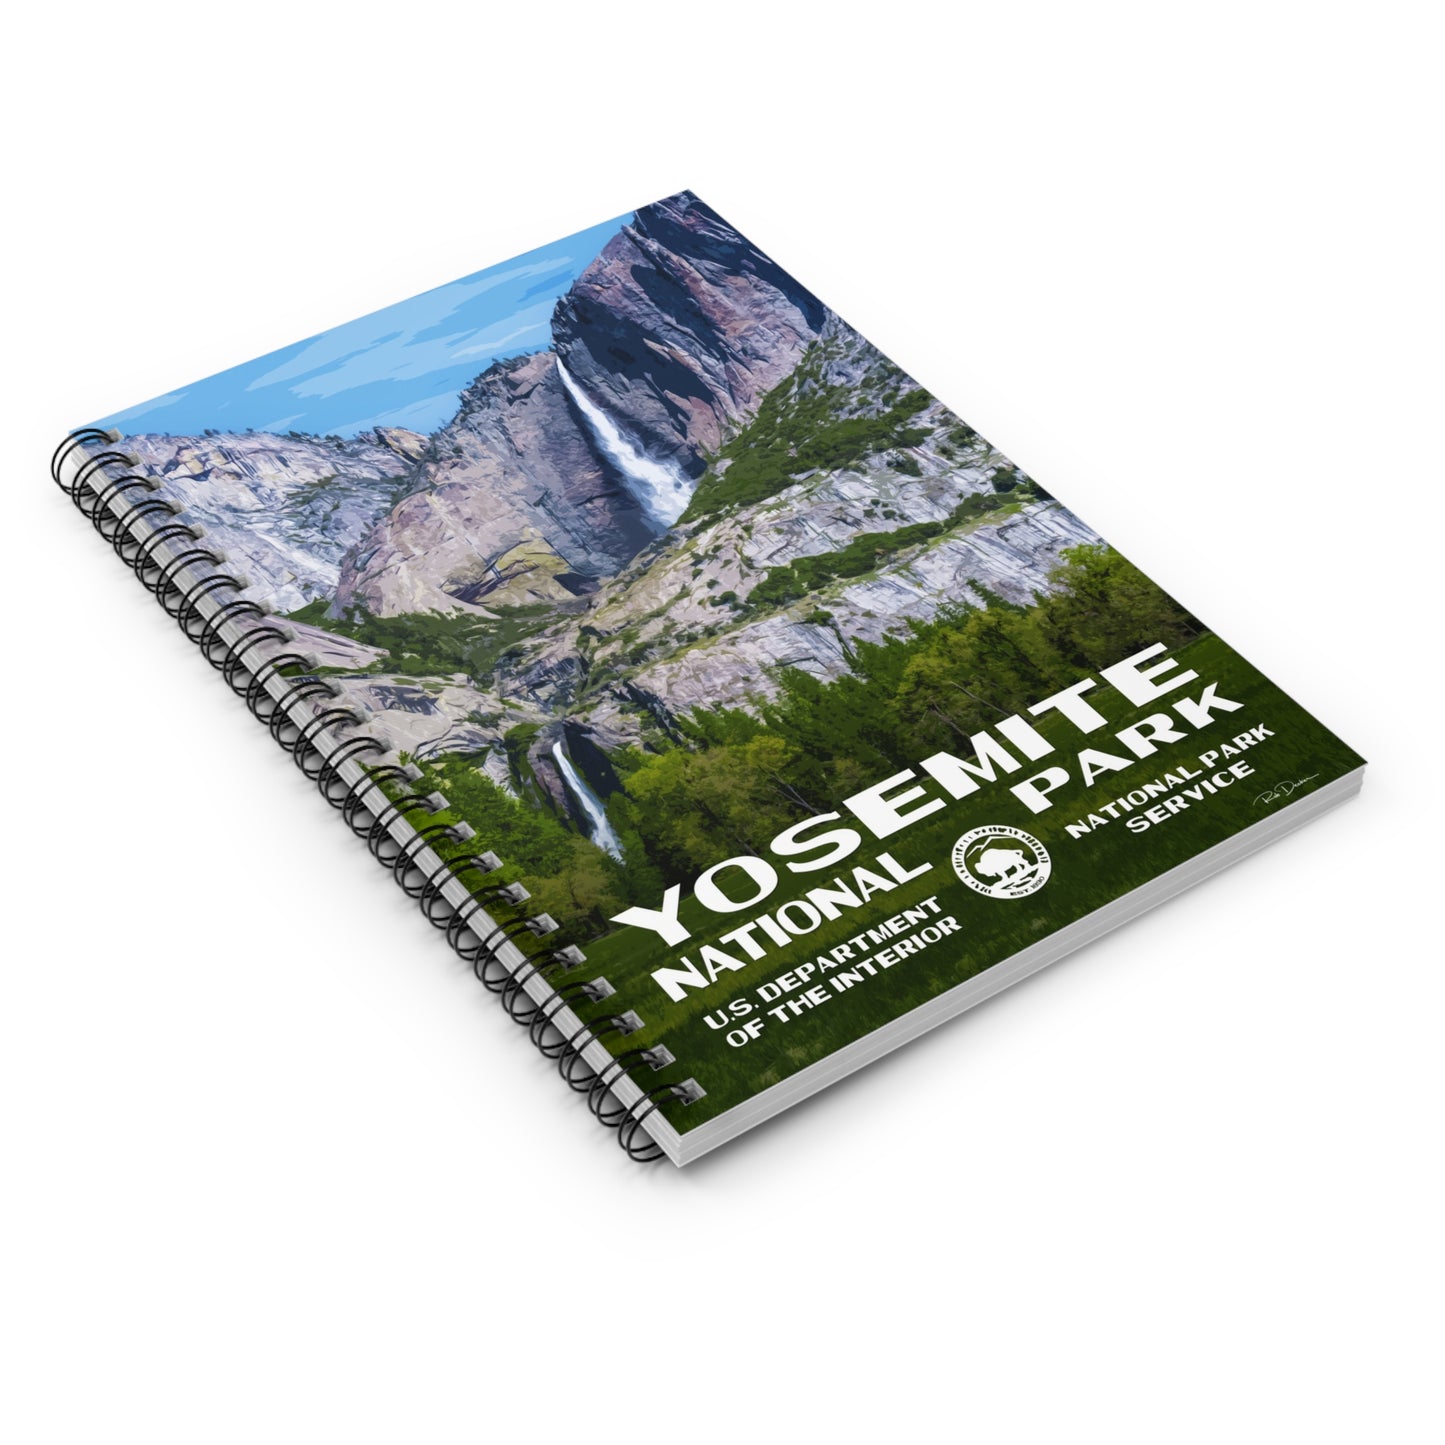 Yosemite National Park (Yosemite Falls) Field Journal